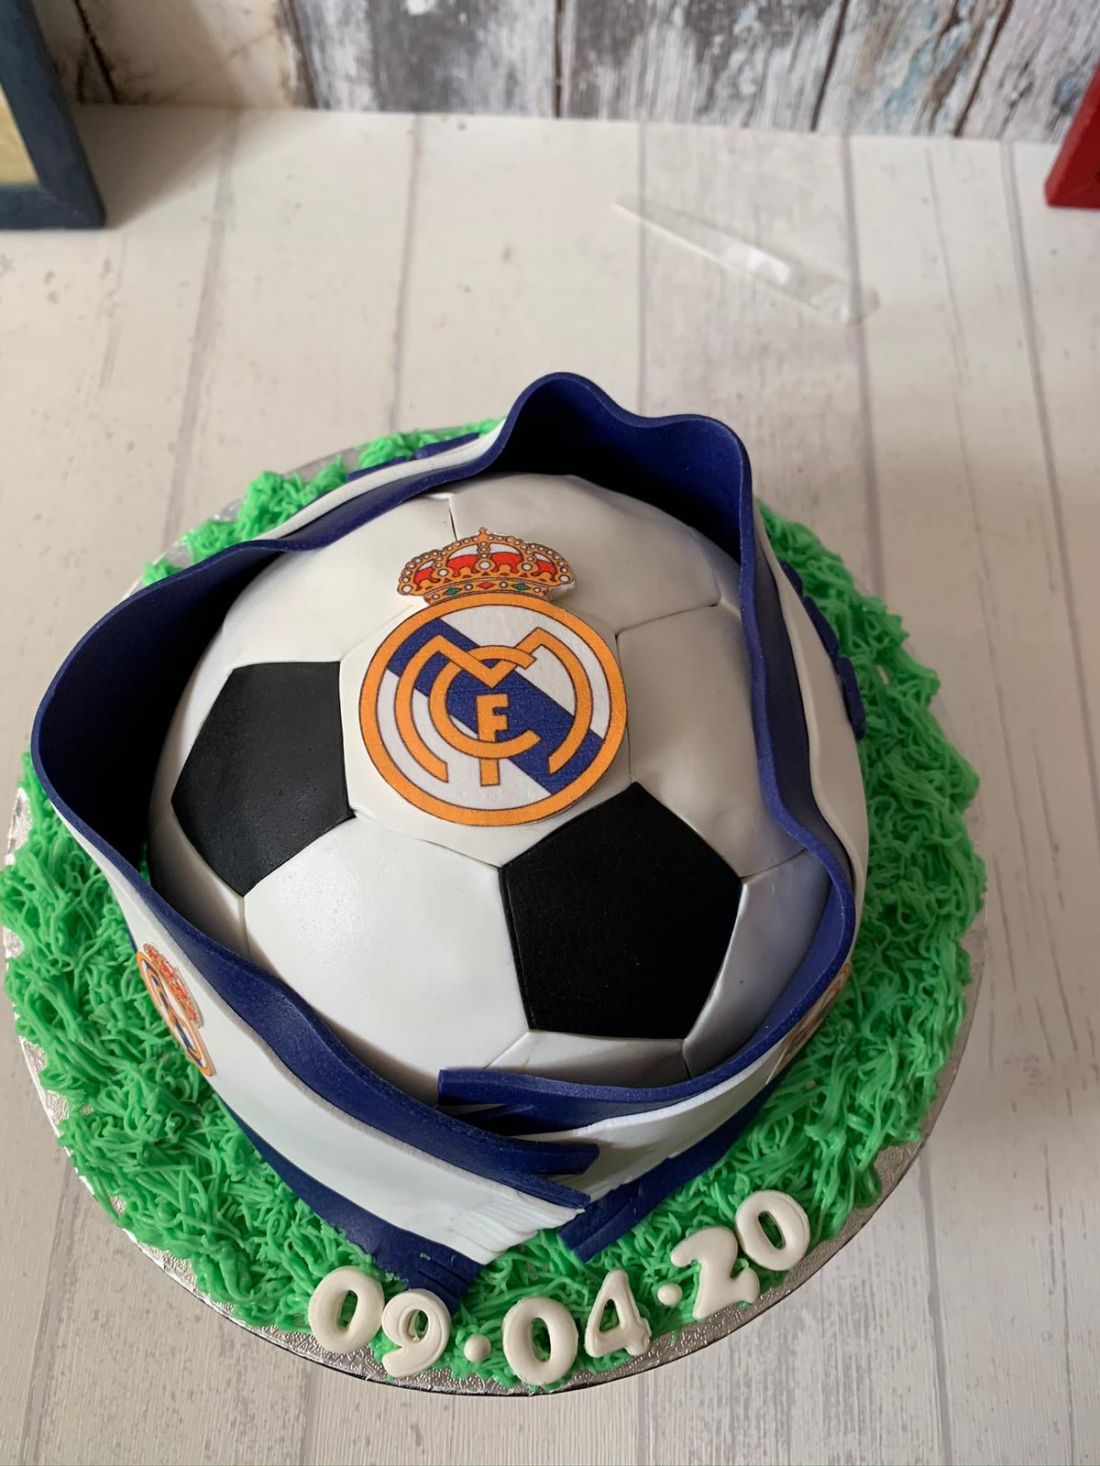 Tartas del Real Madrid pastelería fondant